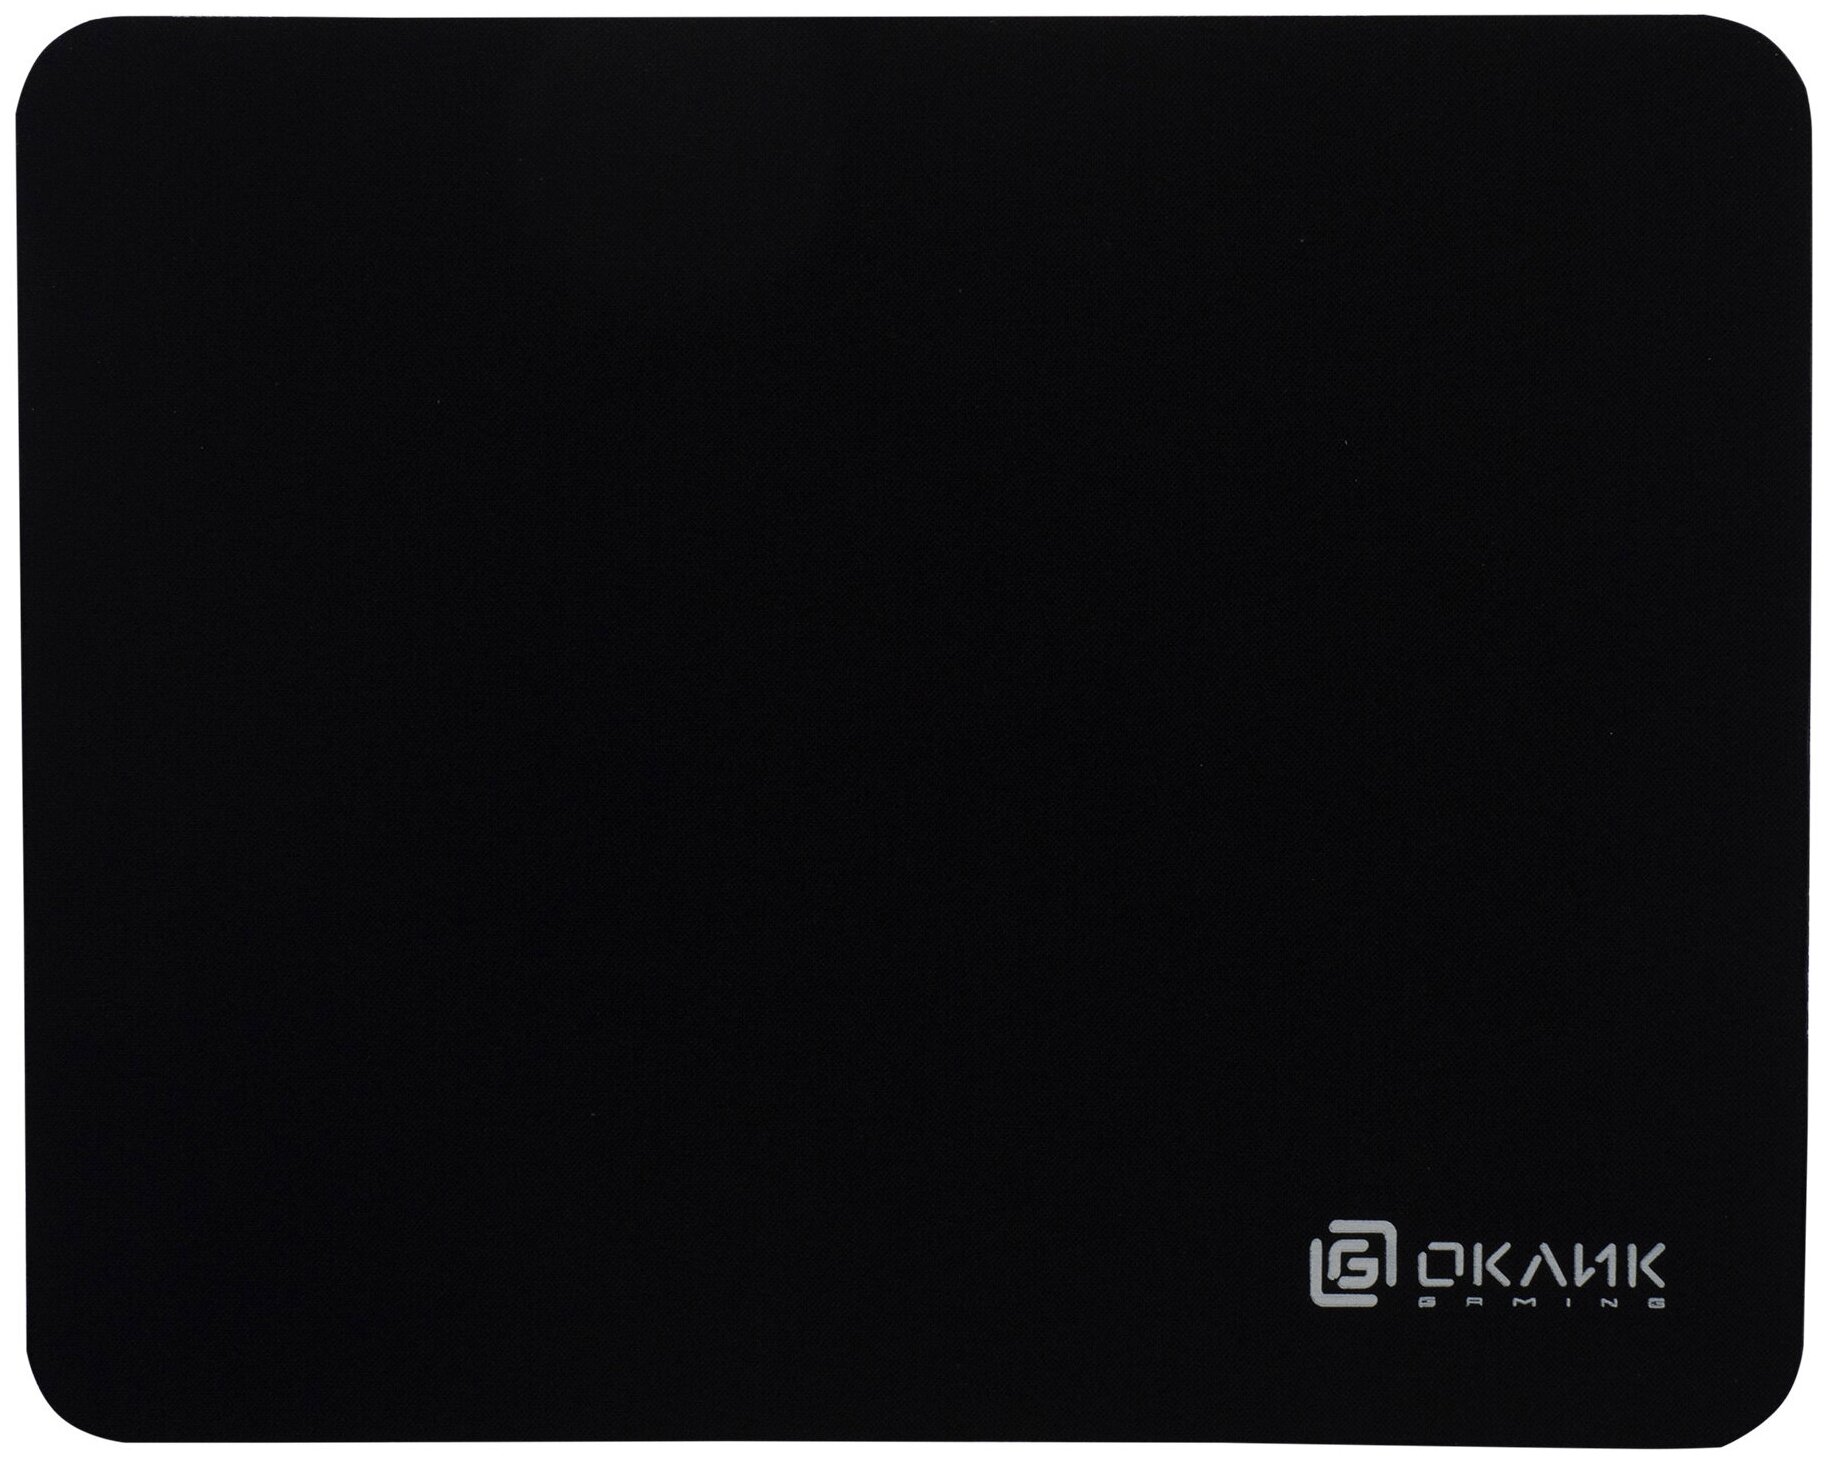 Оклик OK-F0251 Мини черный 250x200x3мм